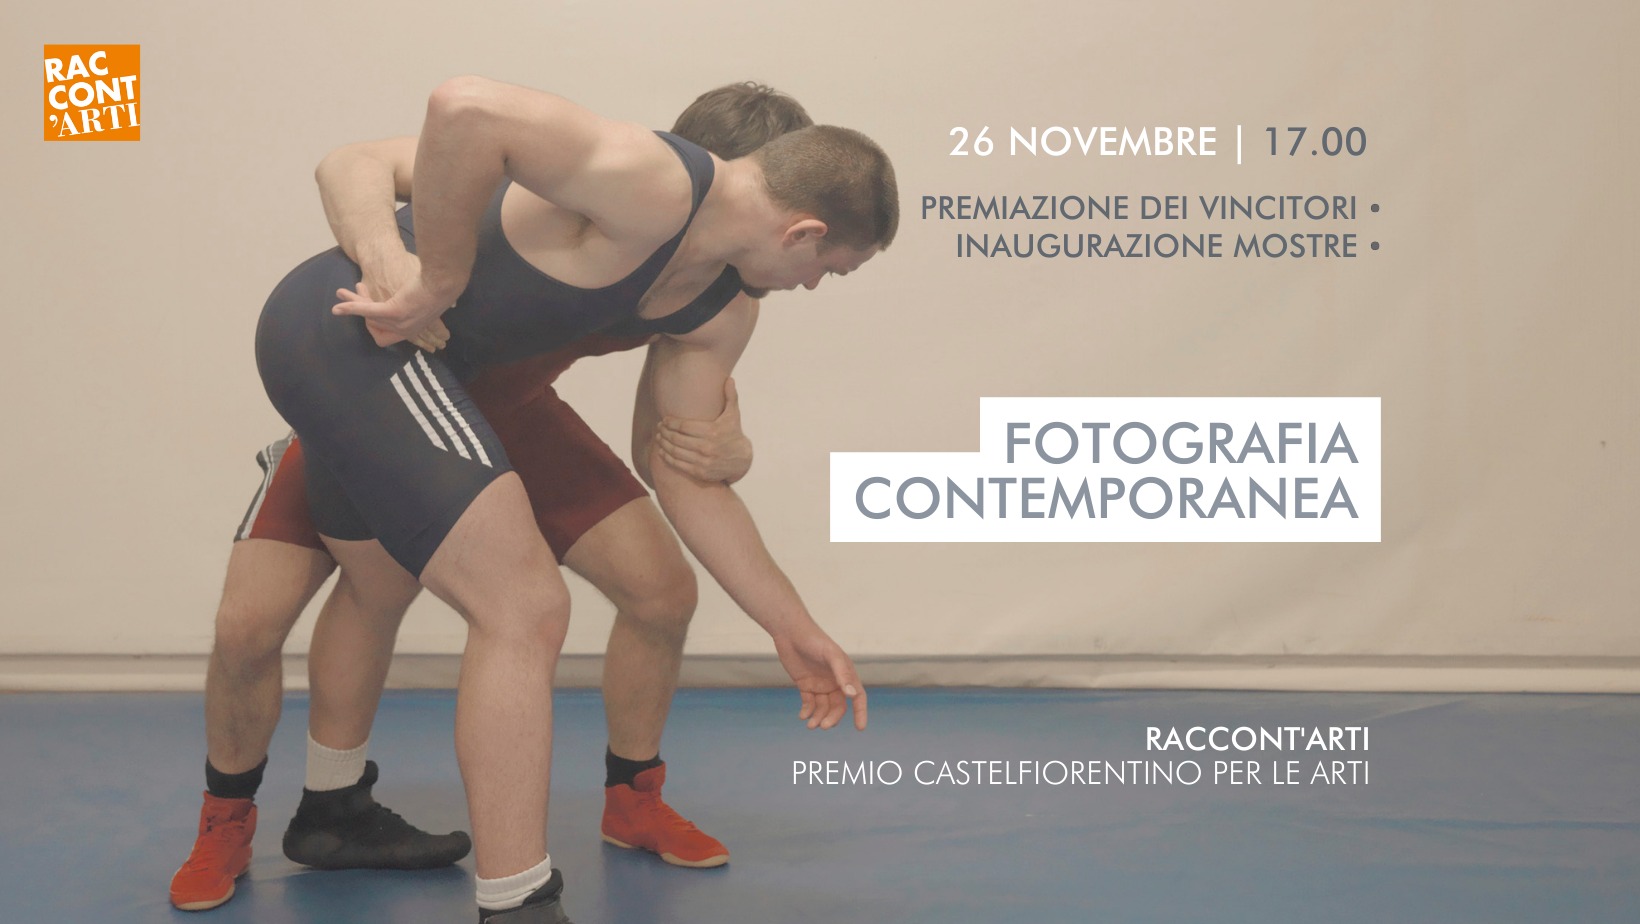 Exhibition: Castelfiorentino’s Raccont’Arti Award